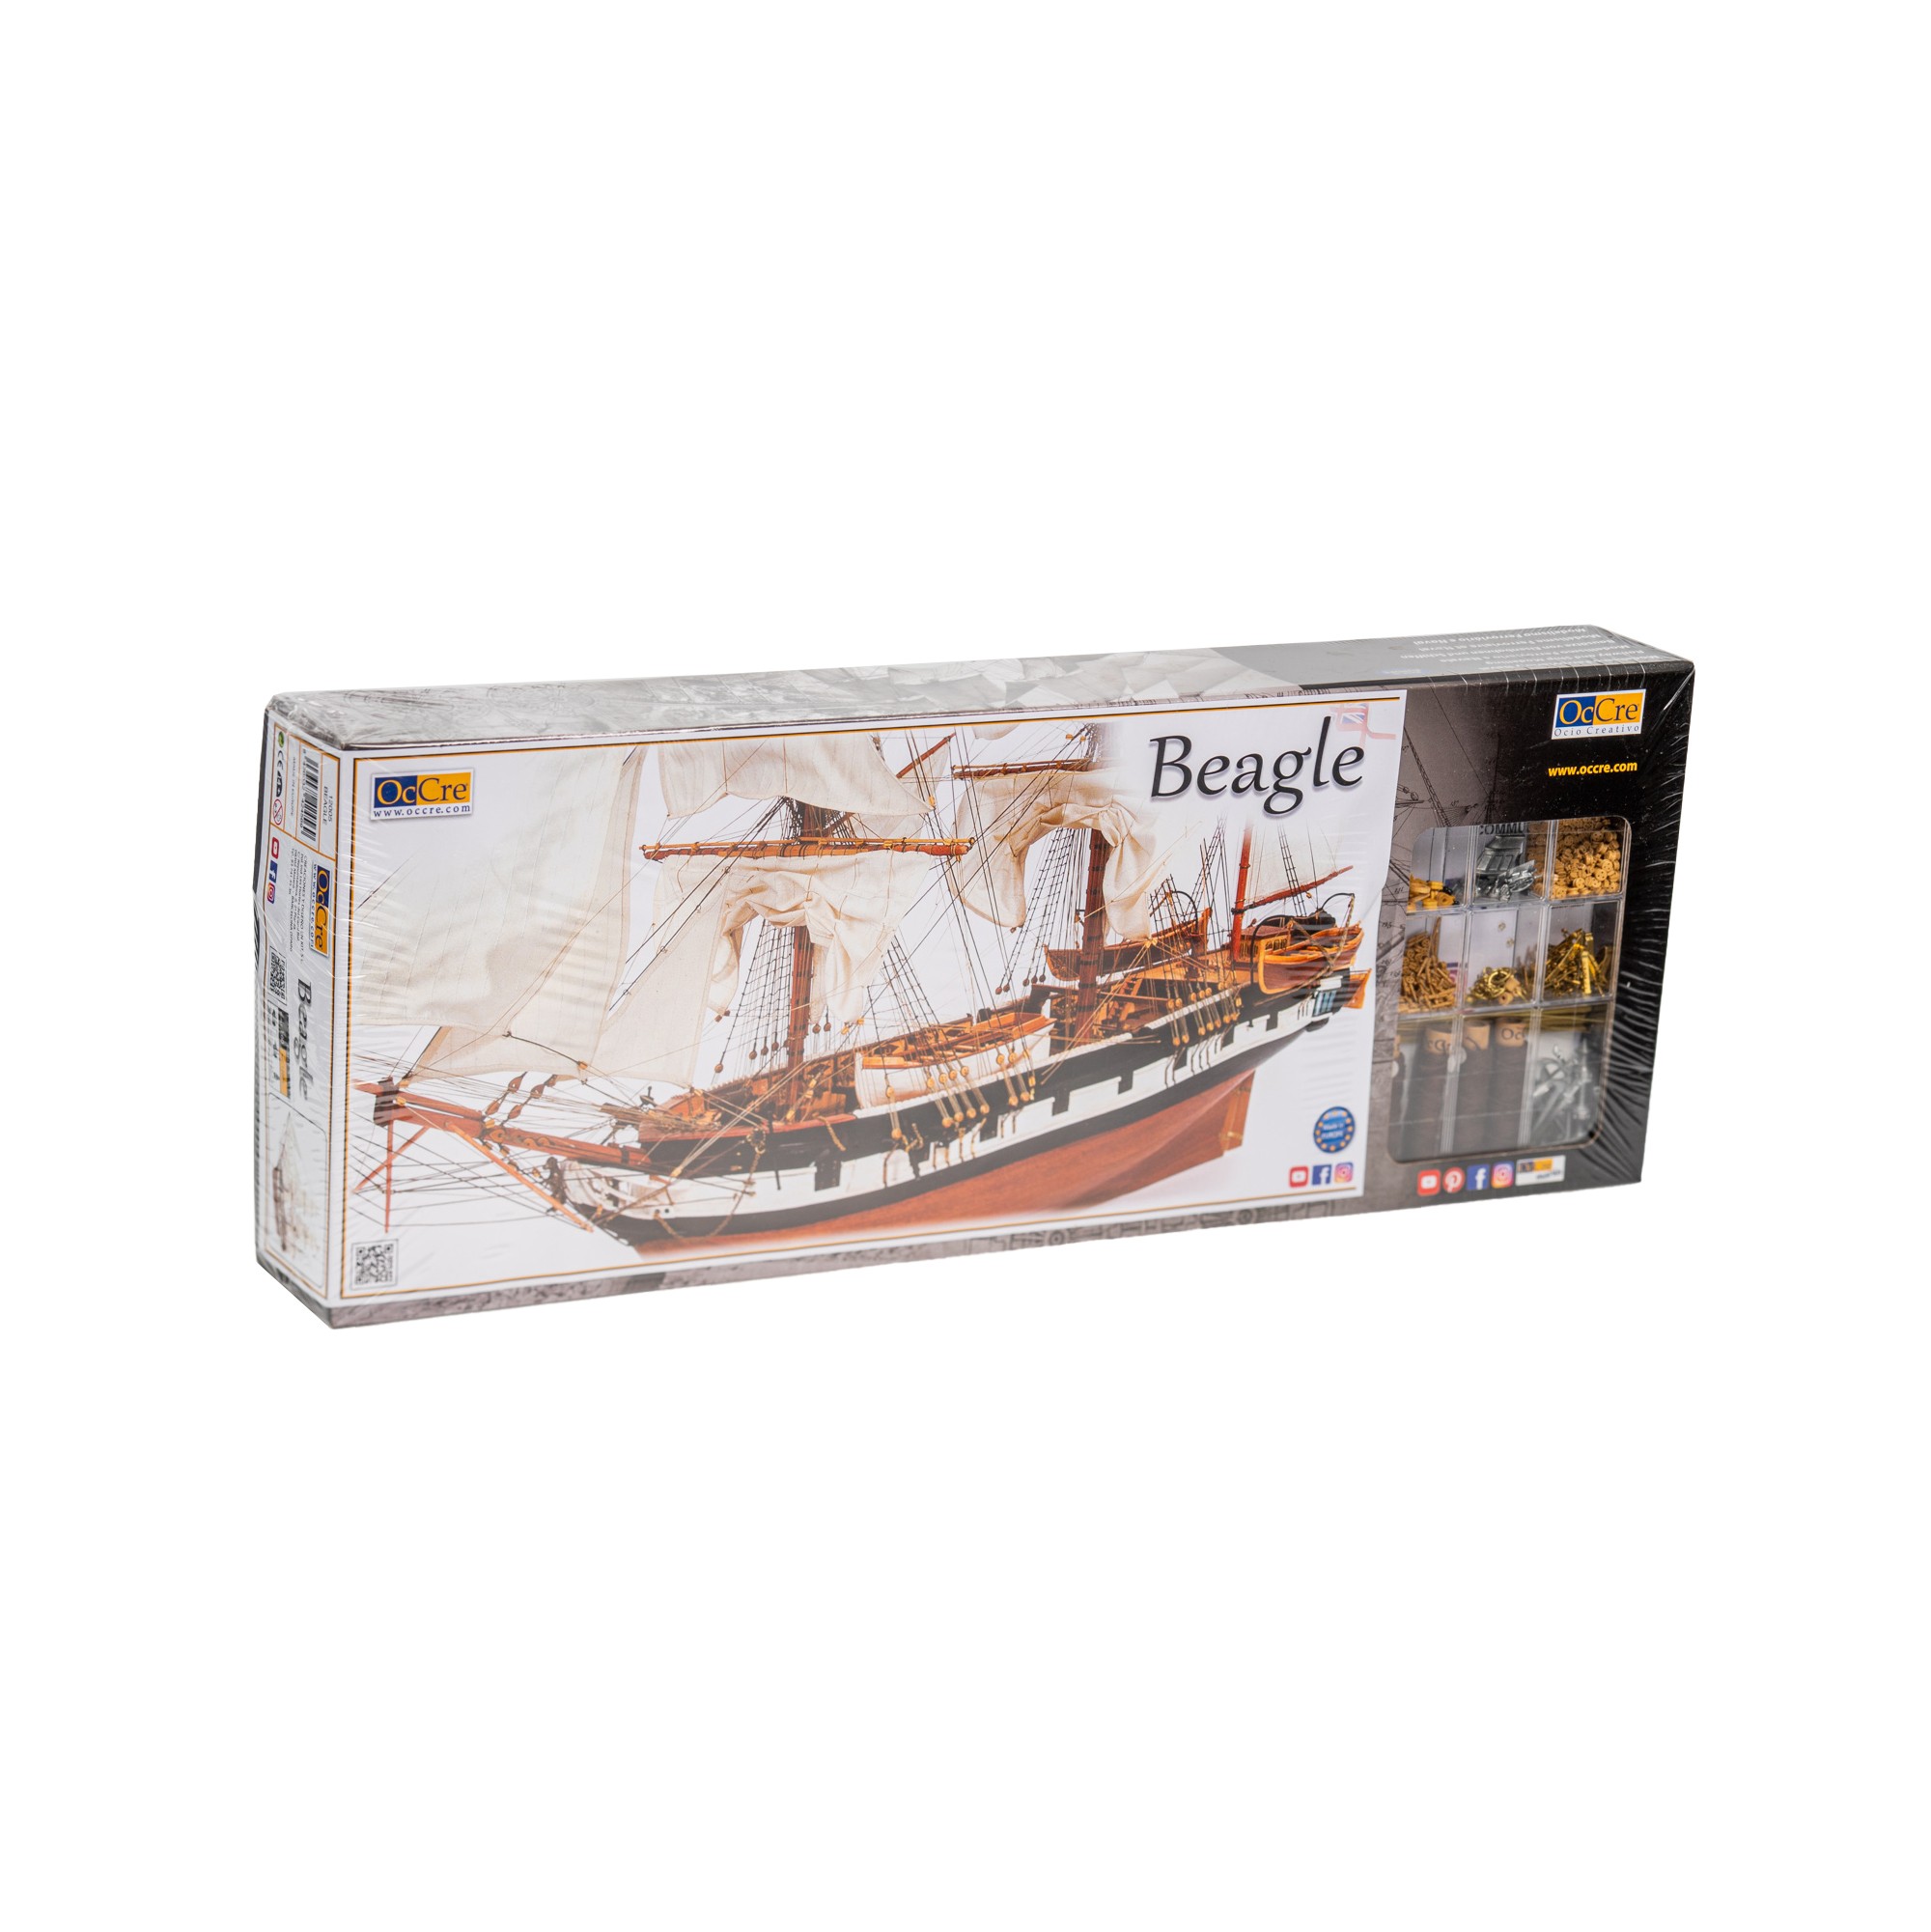 HMS Beagle scale 1:60 OcCre 12005 wooden model ship kit 